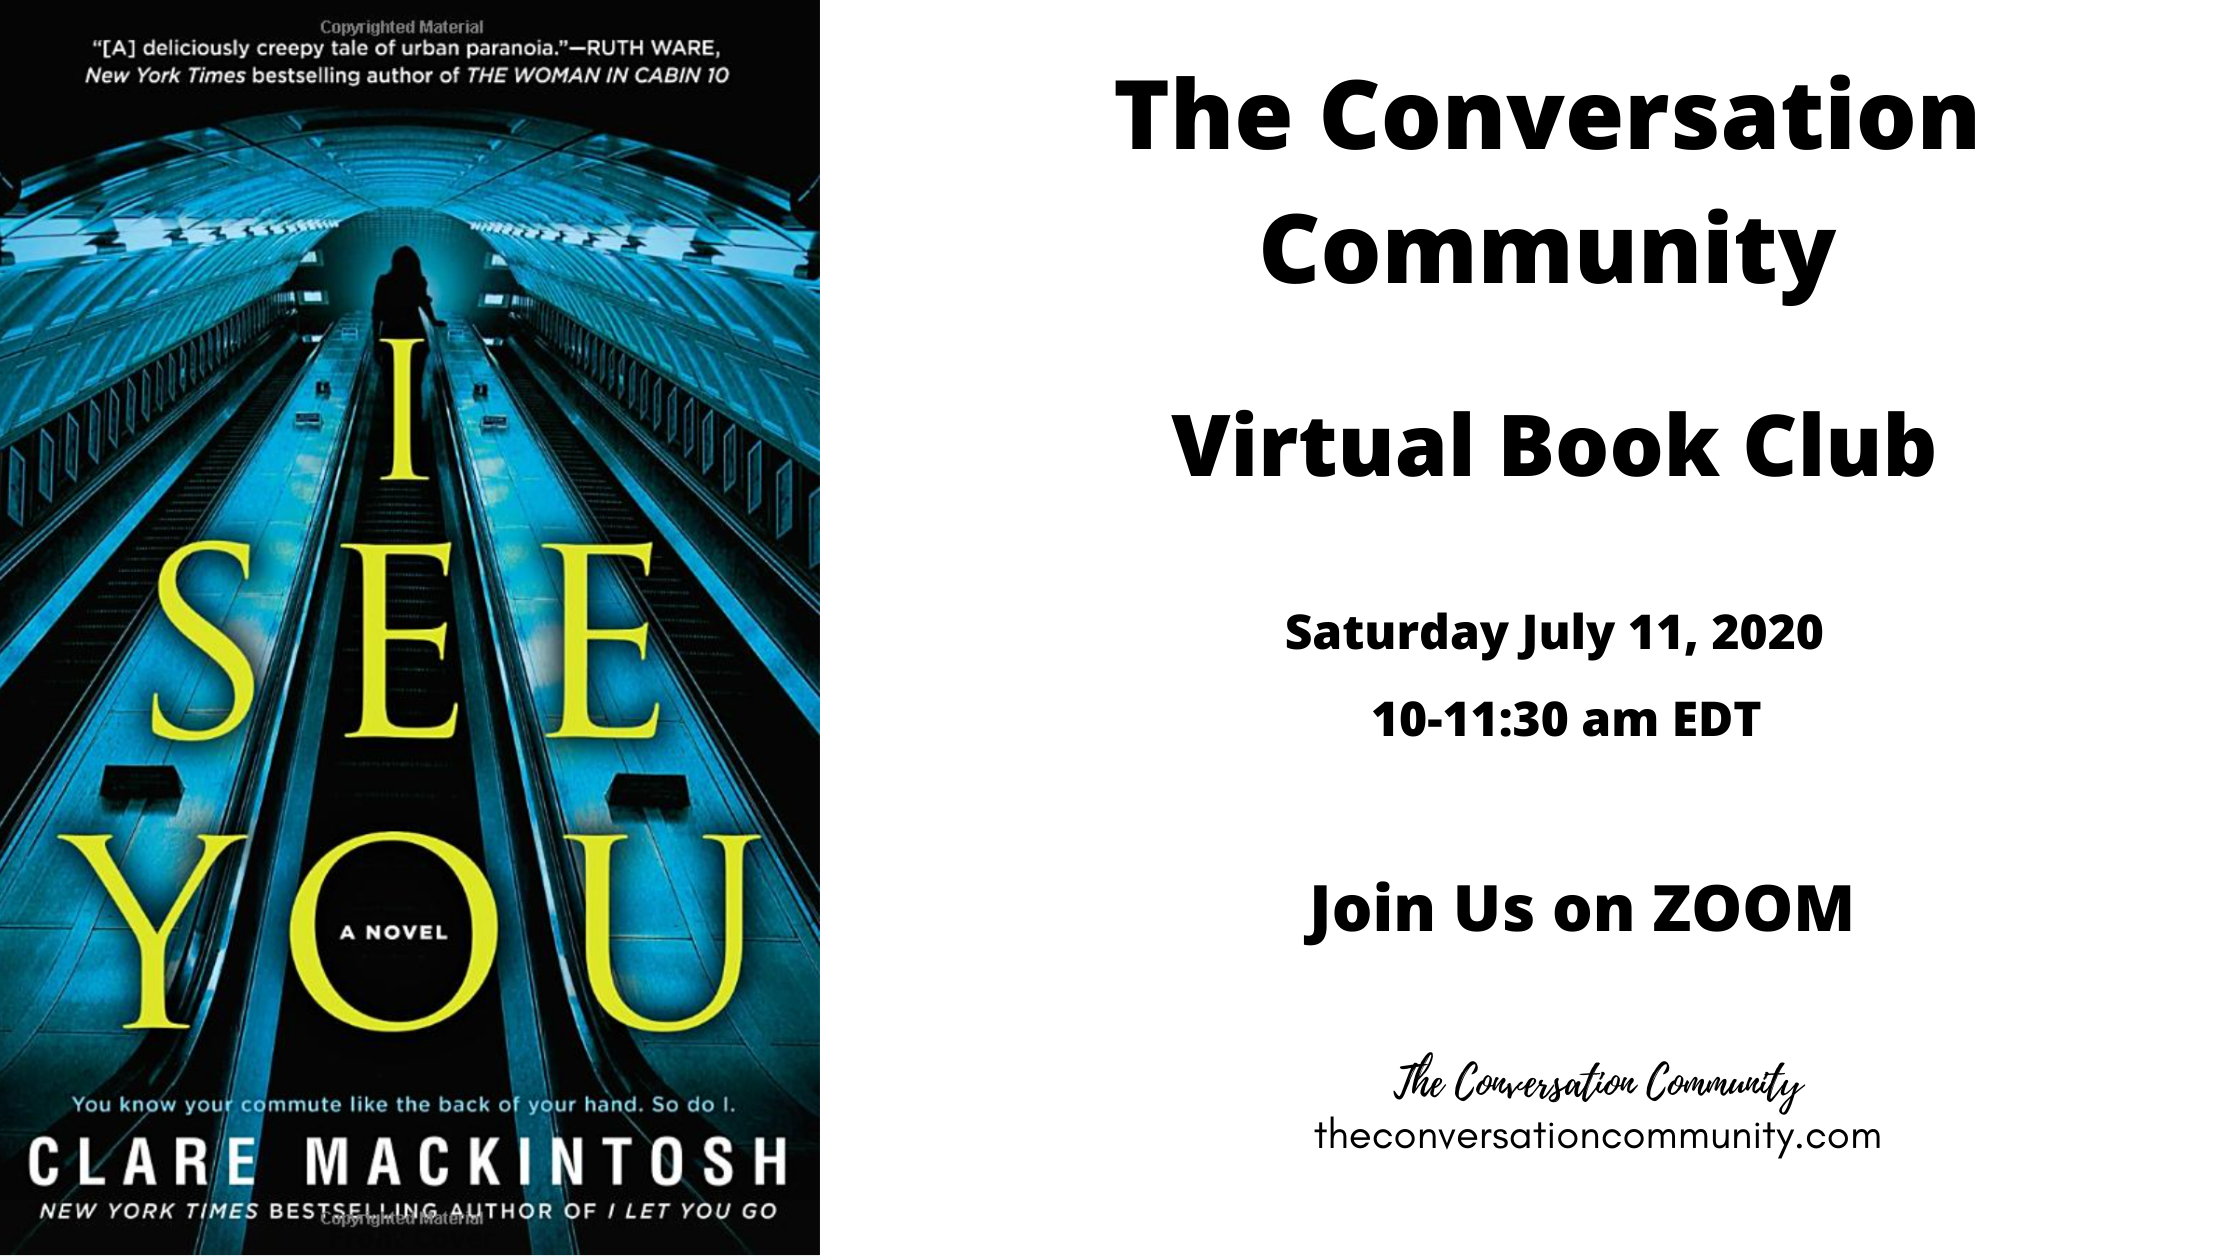 I See You Virtual Book Club